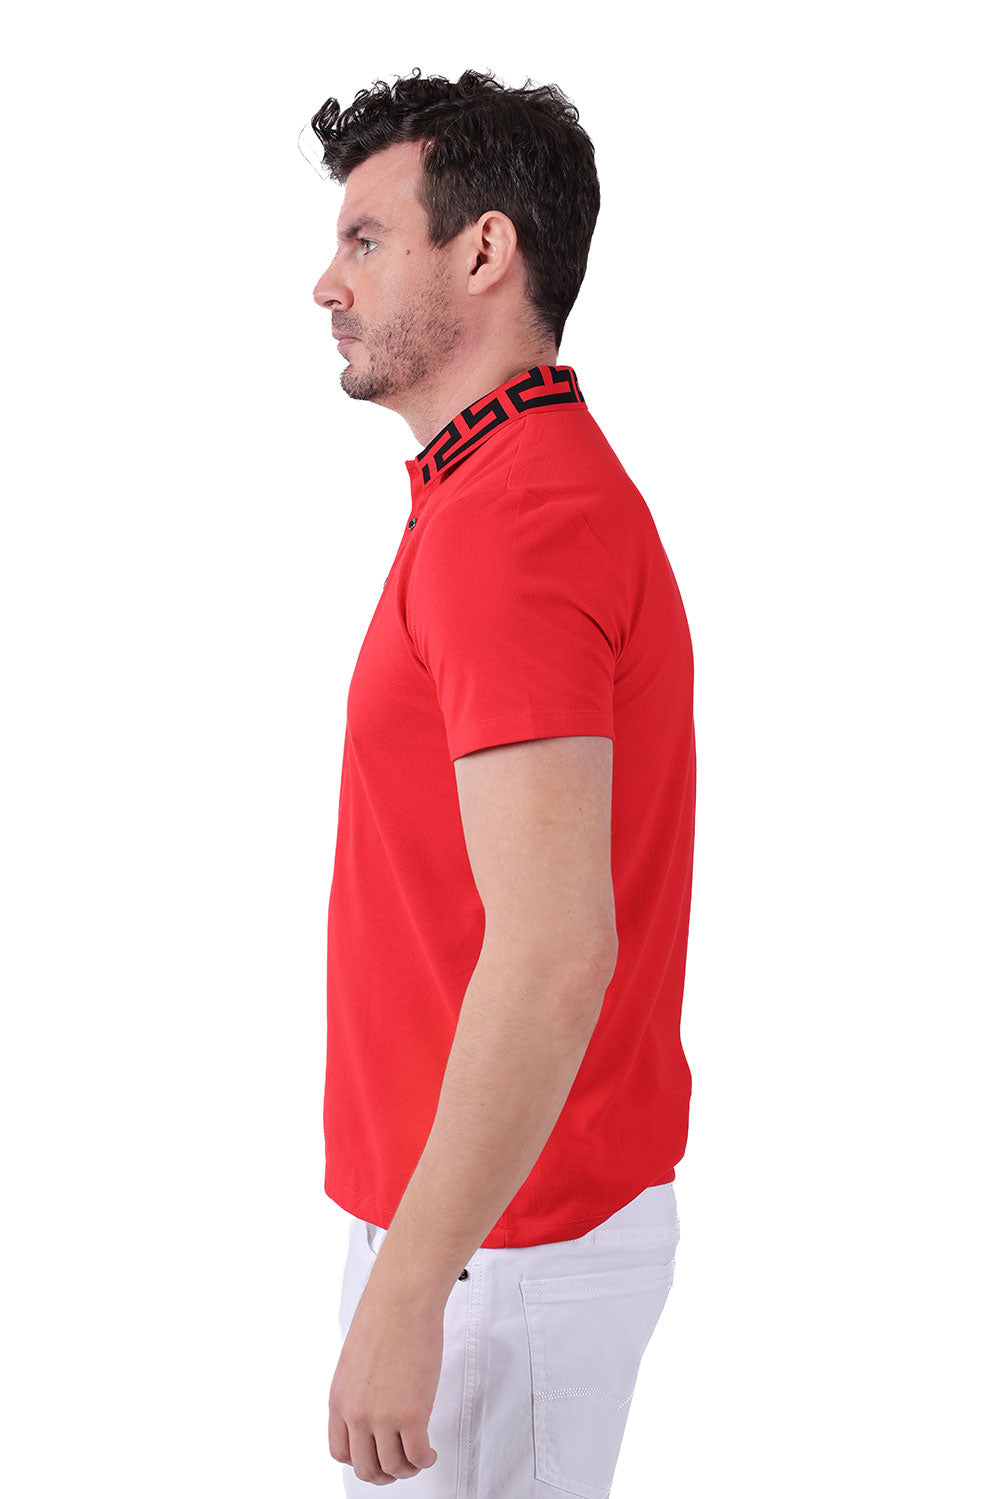 Barabas Men's Greek Key Printed Pattern Short Sleeve Shirts PS121 Red